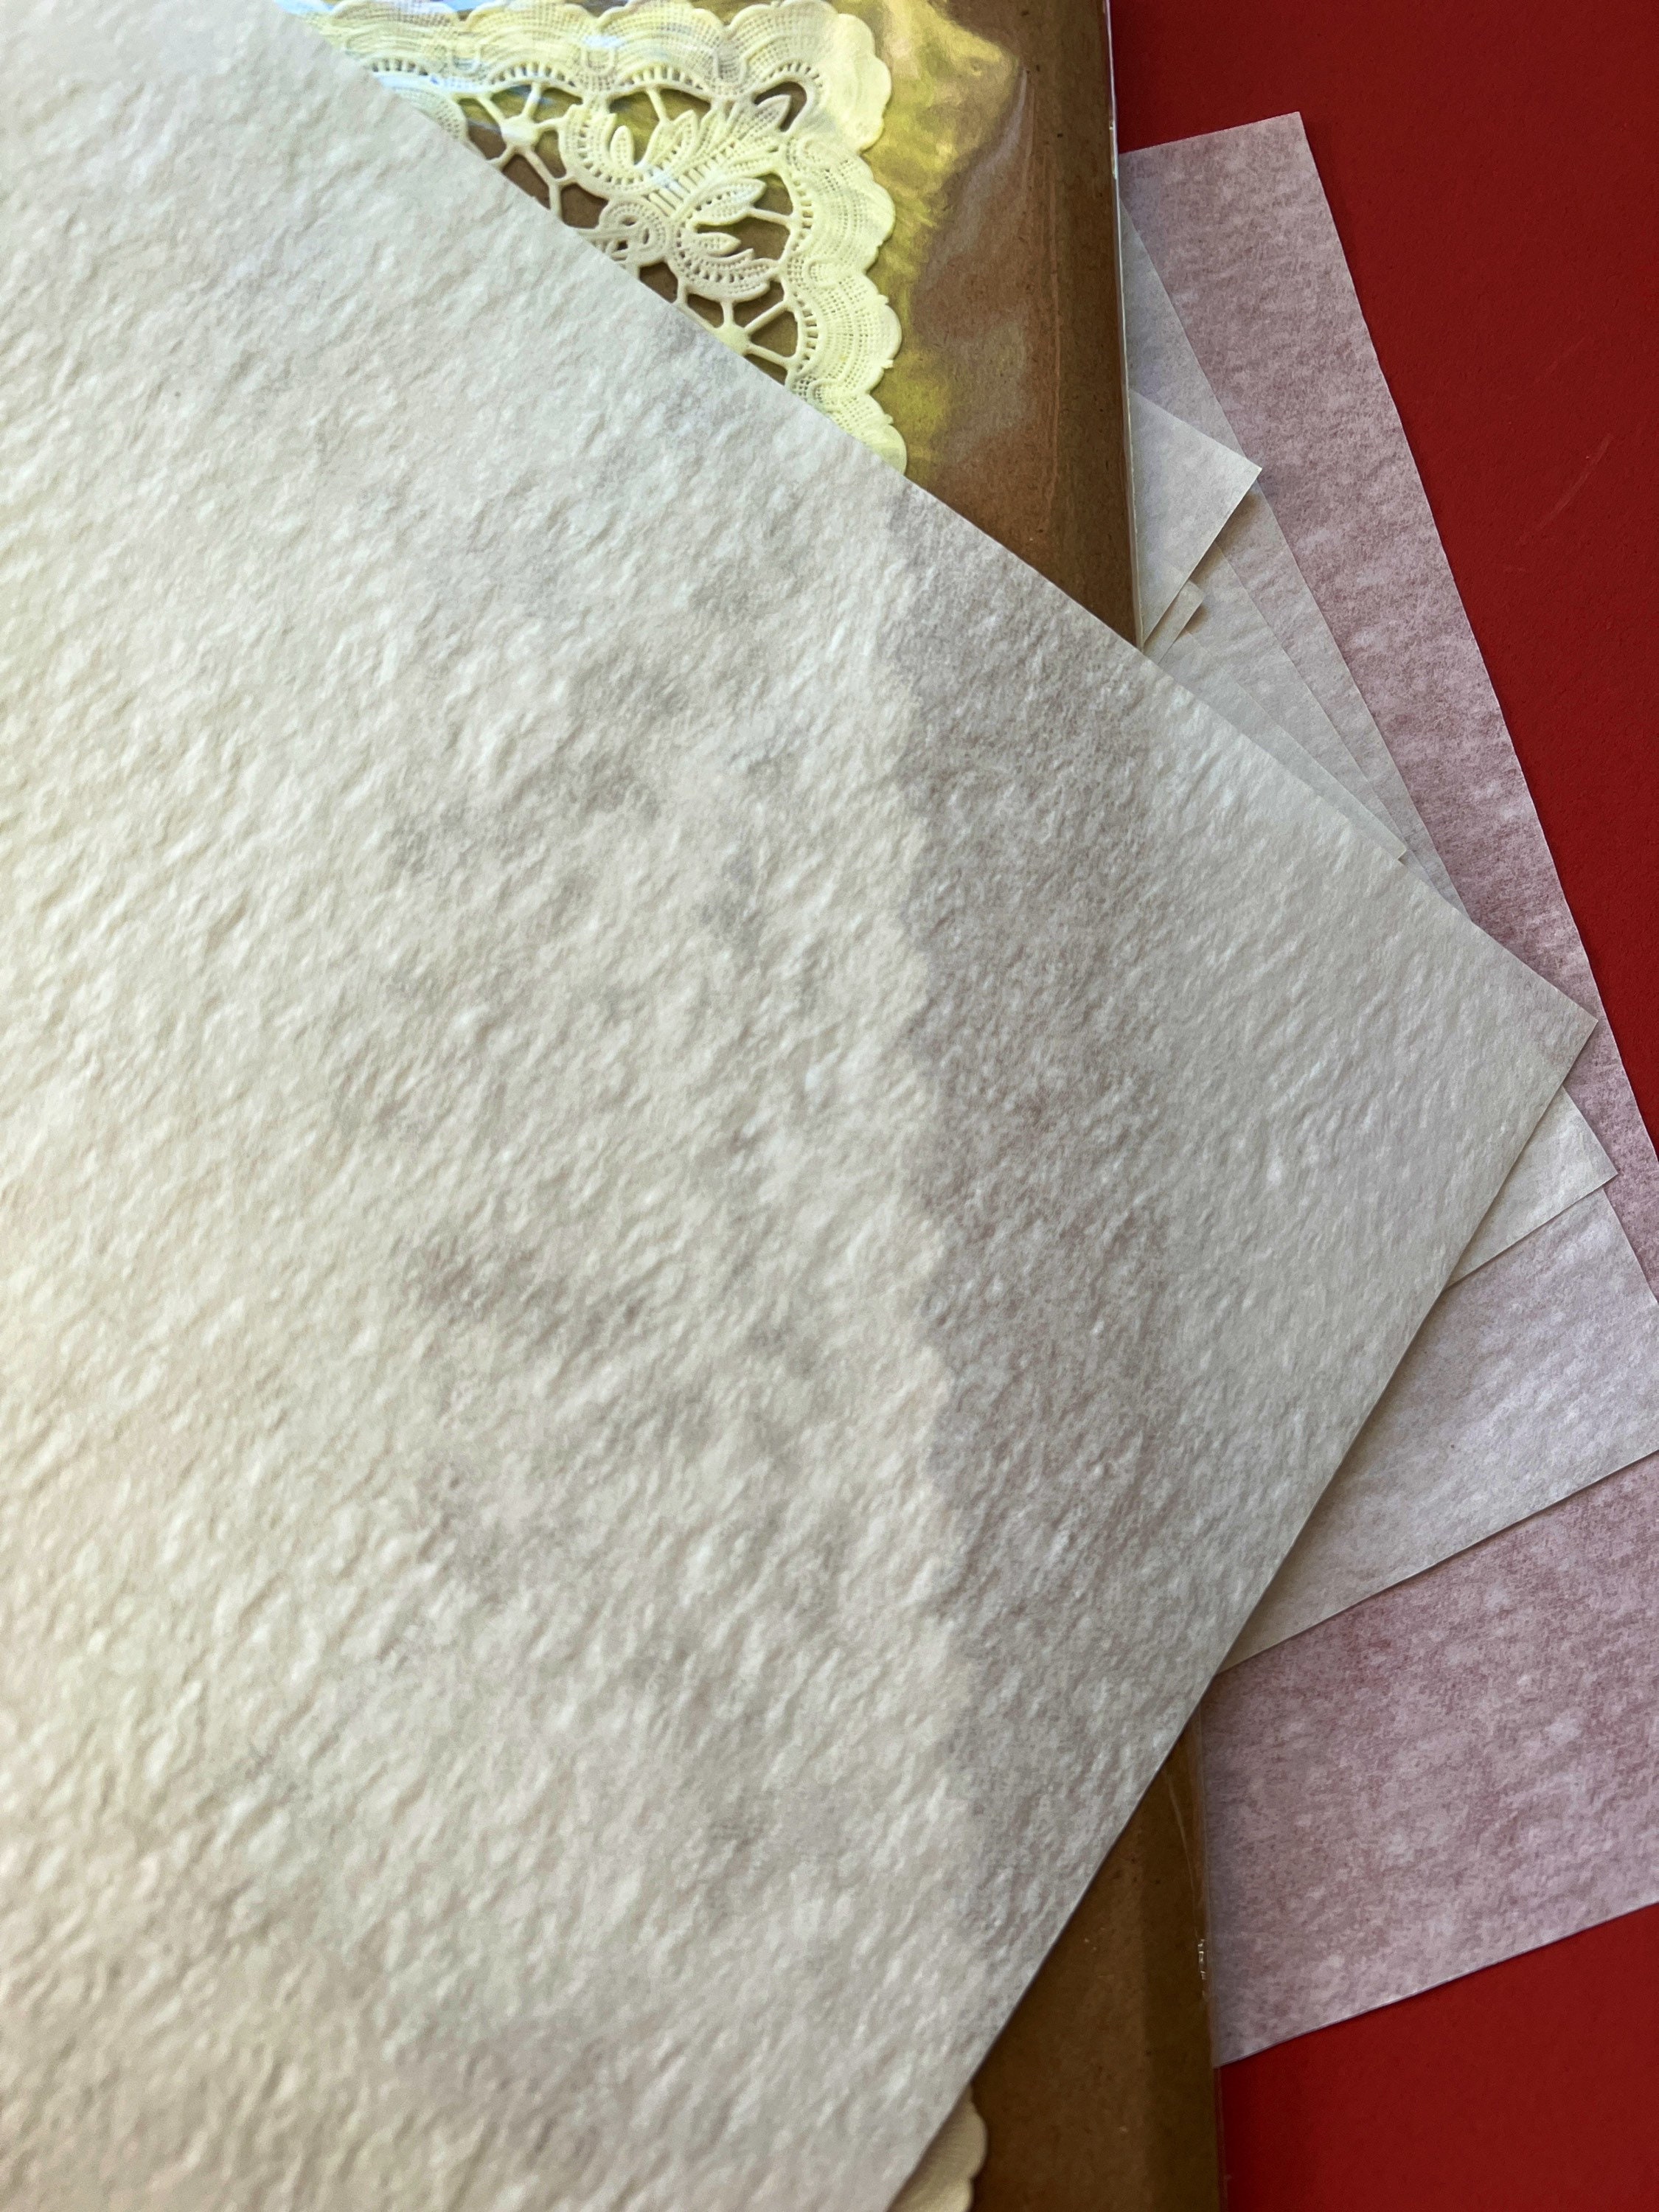 Onion Skin Paper, Cockle Finish, 25% Cotton Fiber, Lightweight, 12